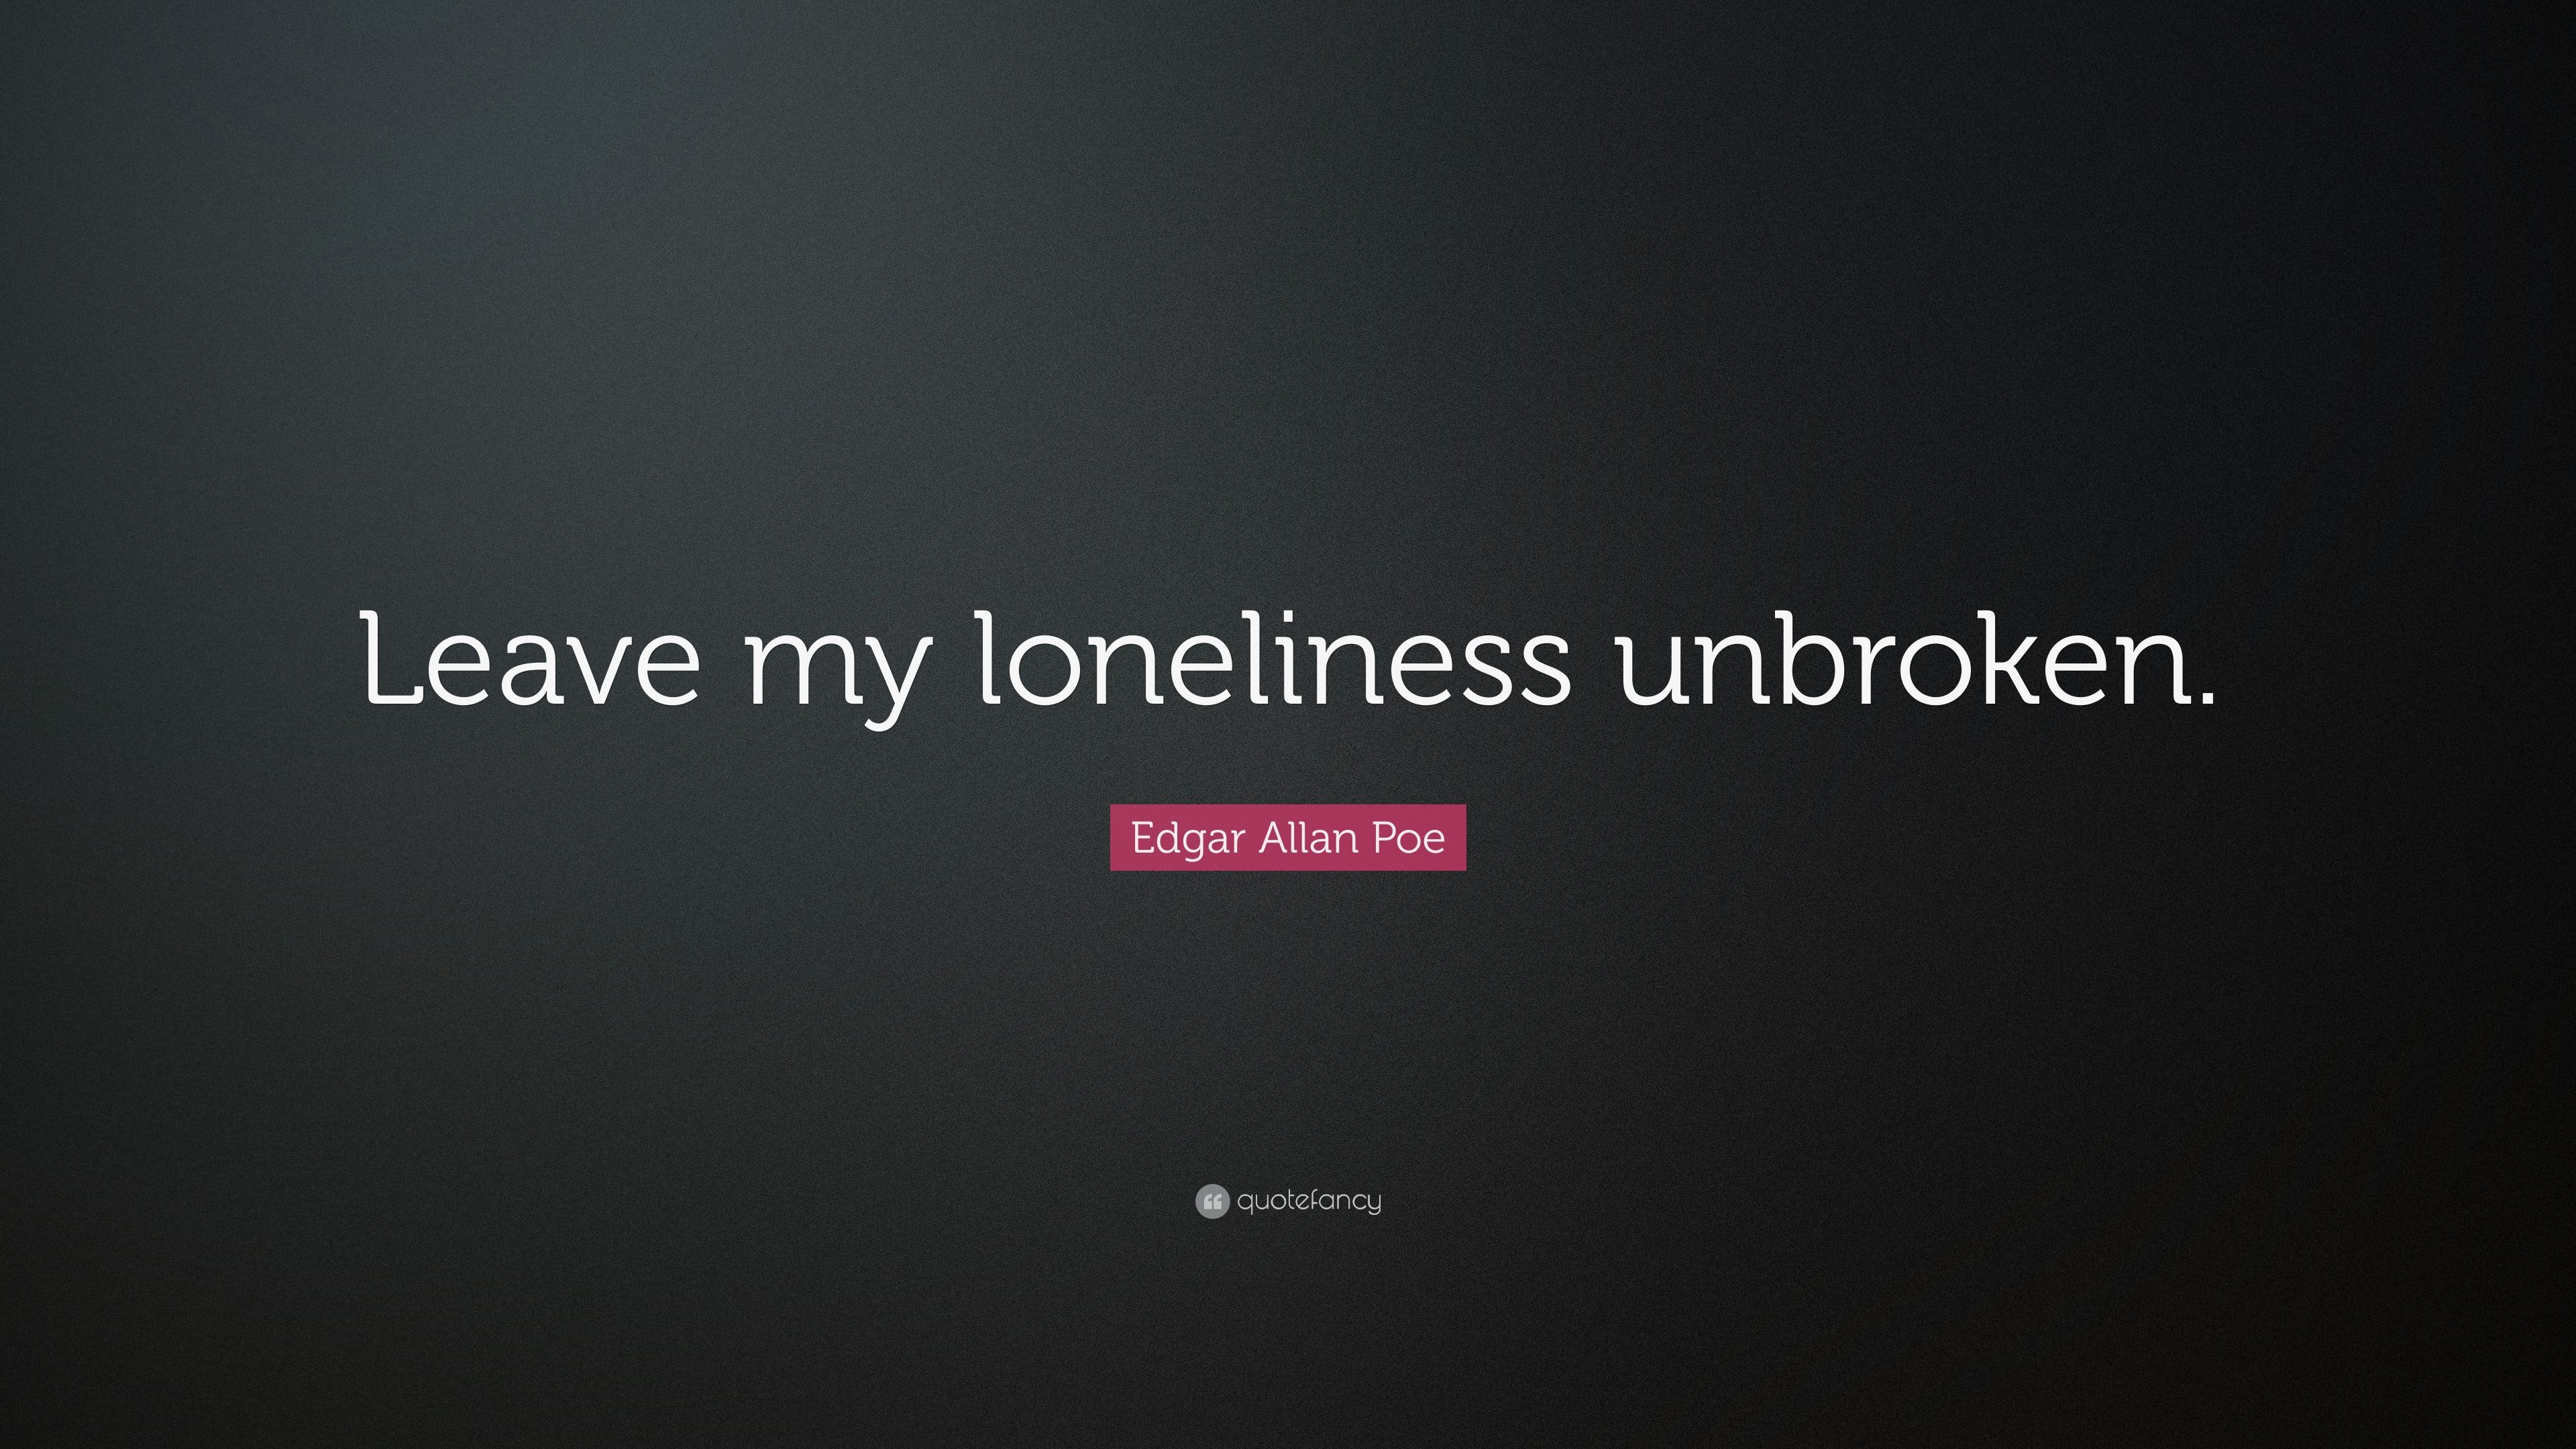 Edgar Allan Poe Quote: “Leave my loneliness unbroken.” (20 wallpaper)